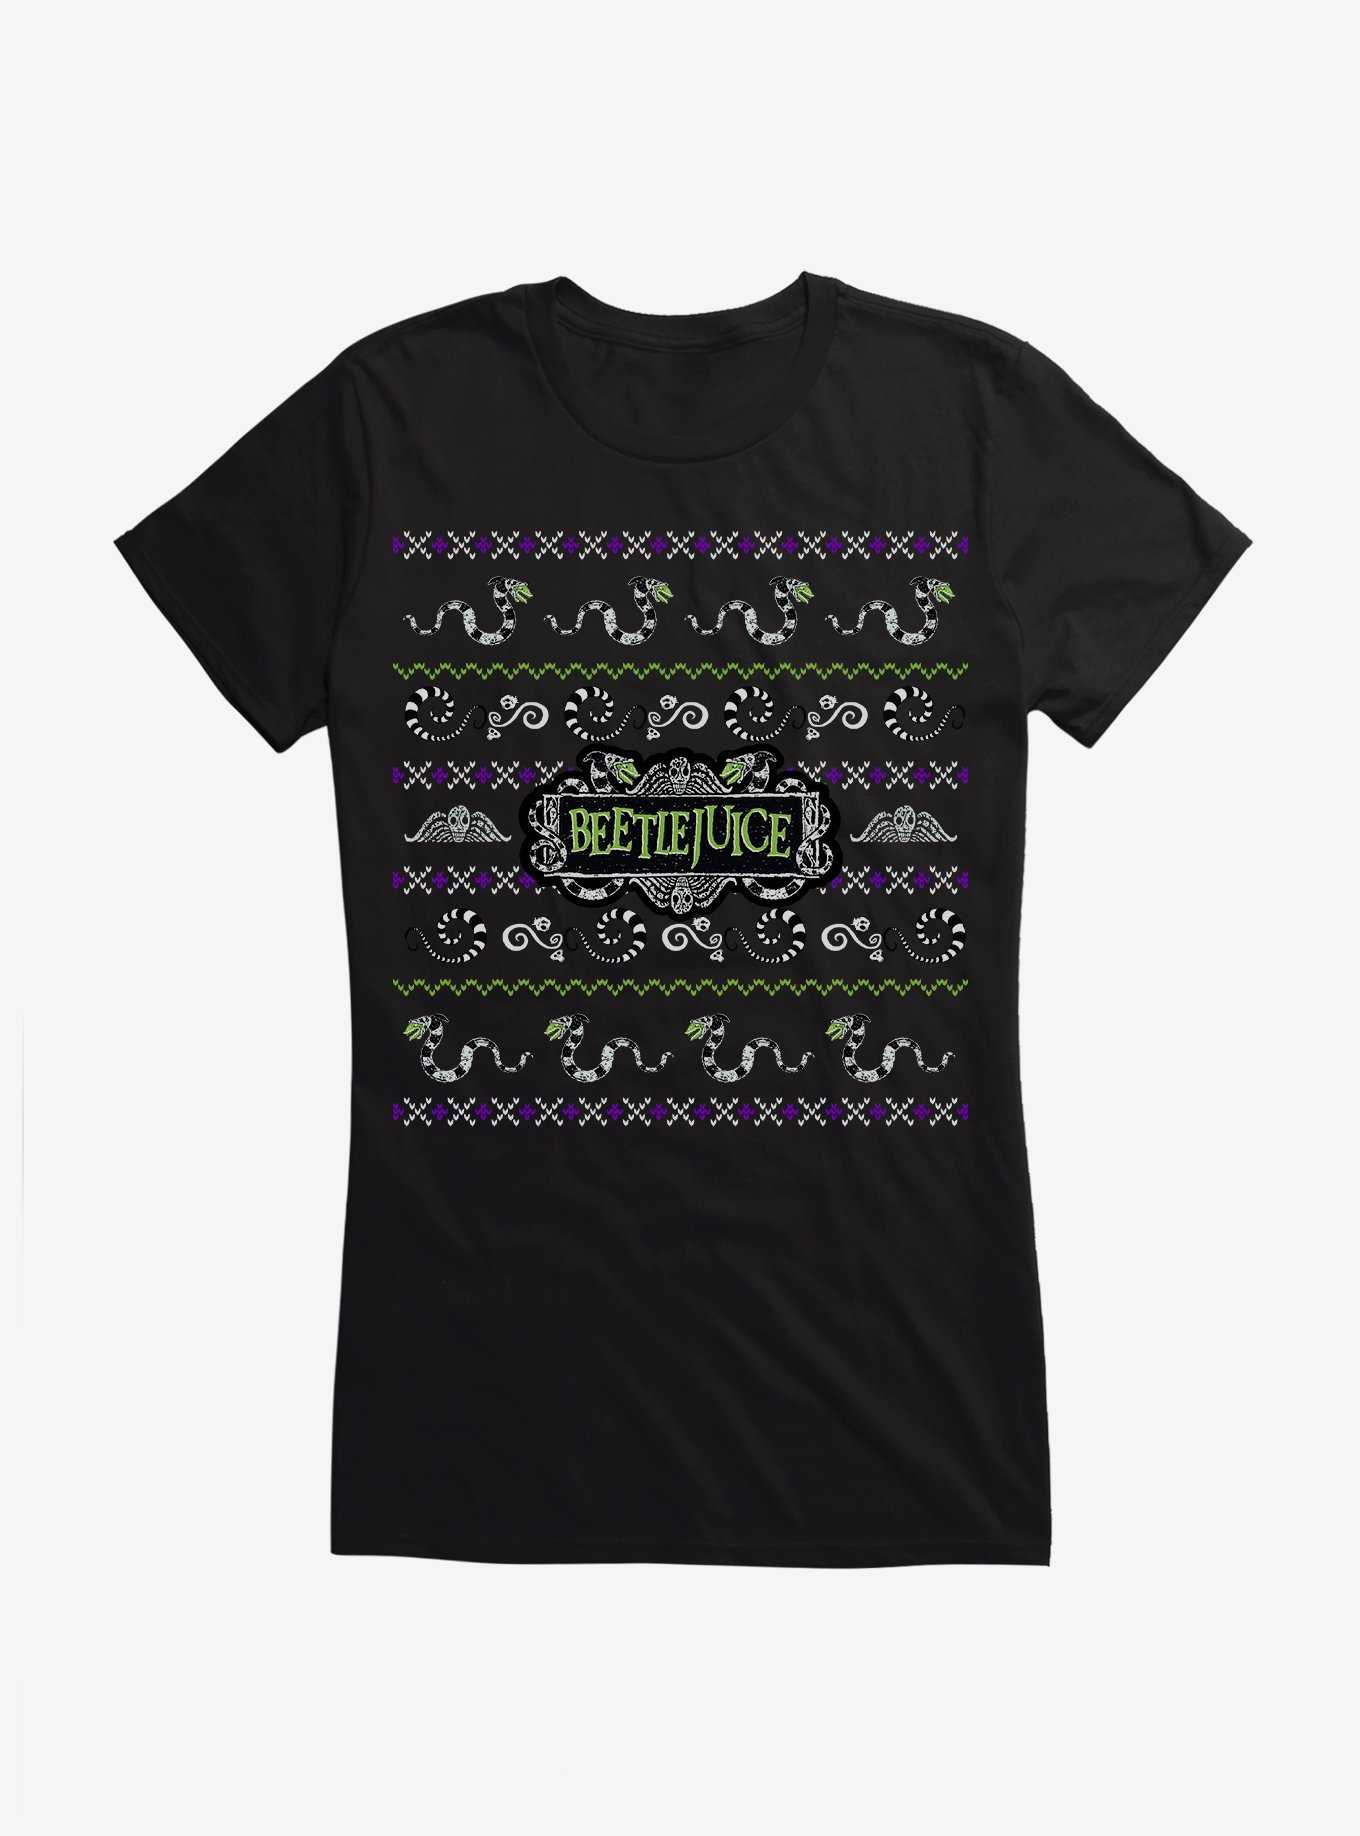 Beetlejuice Ugly Christmas Sweater Pattern Girls T-Shirt, , hi-res